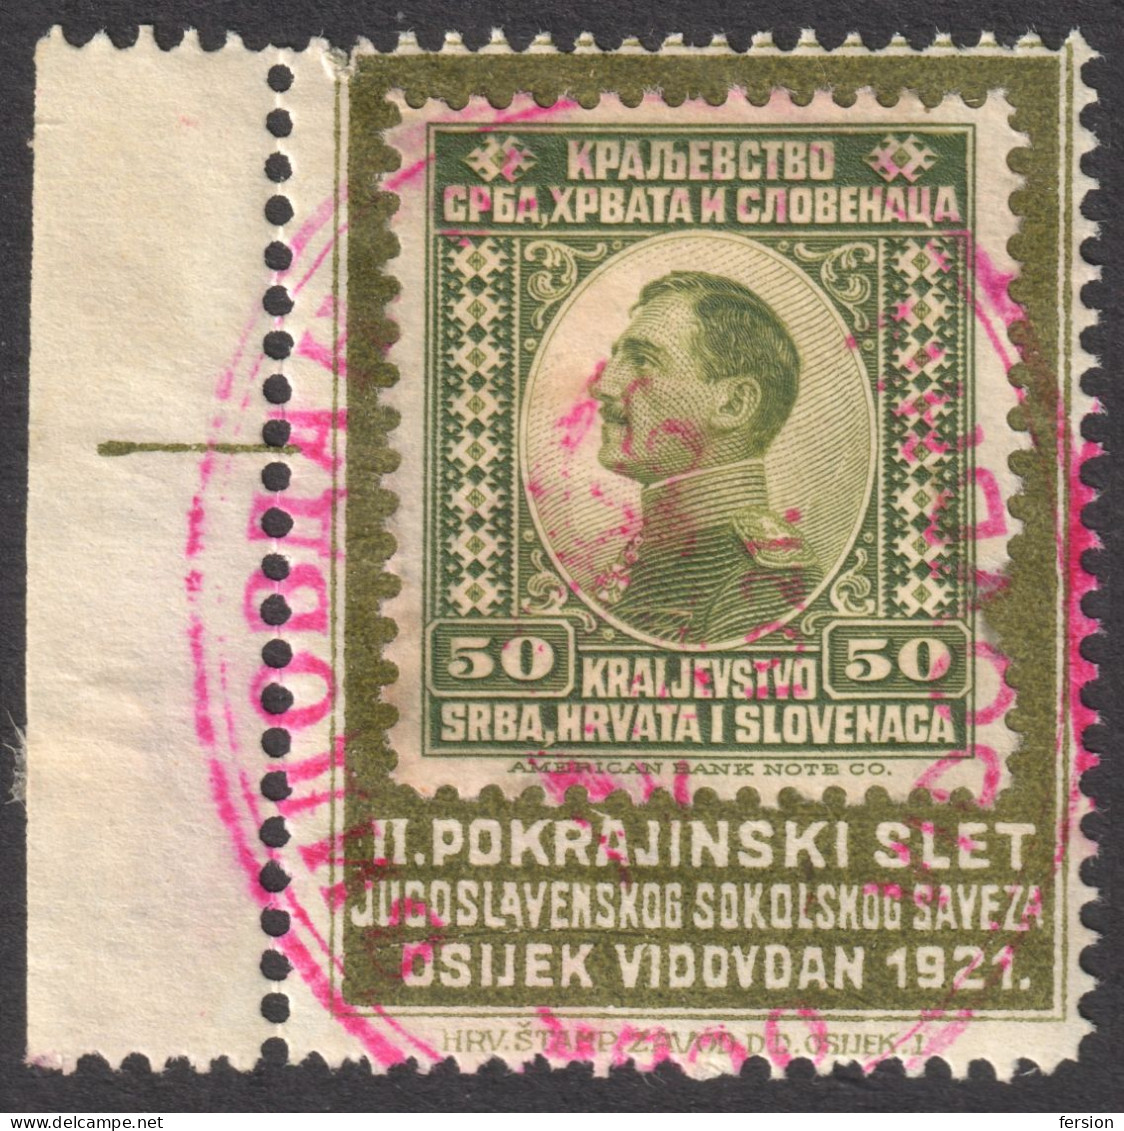 LATIN Letters - 1921 Croatia Yugoslavia SHS Sokolski Slet Scouts Scout Meeting OSIJEK FDC Cinderella Vignette Label - Oblitérés